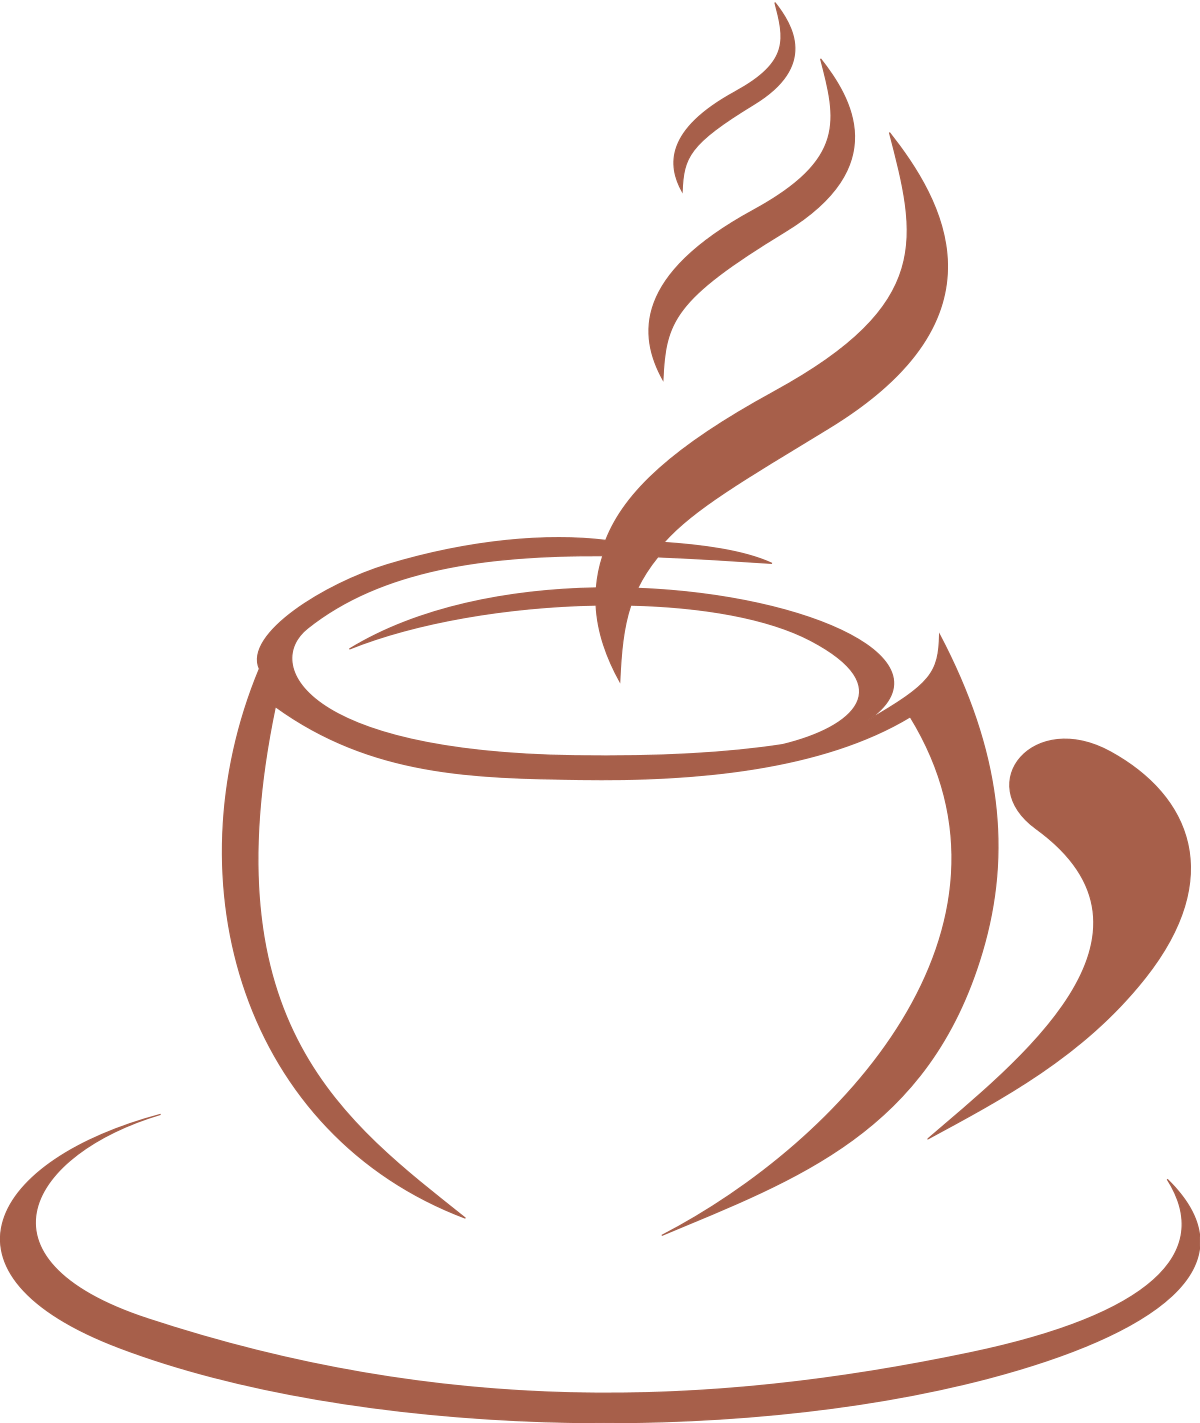 Download Datei:Coffee-2346113.svg - Wikipedia